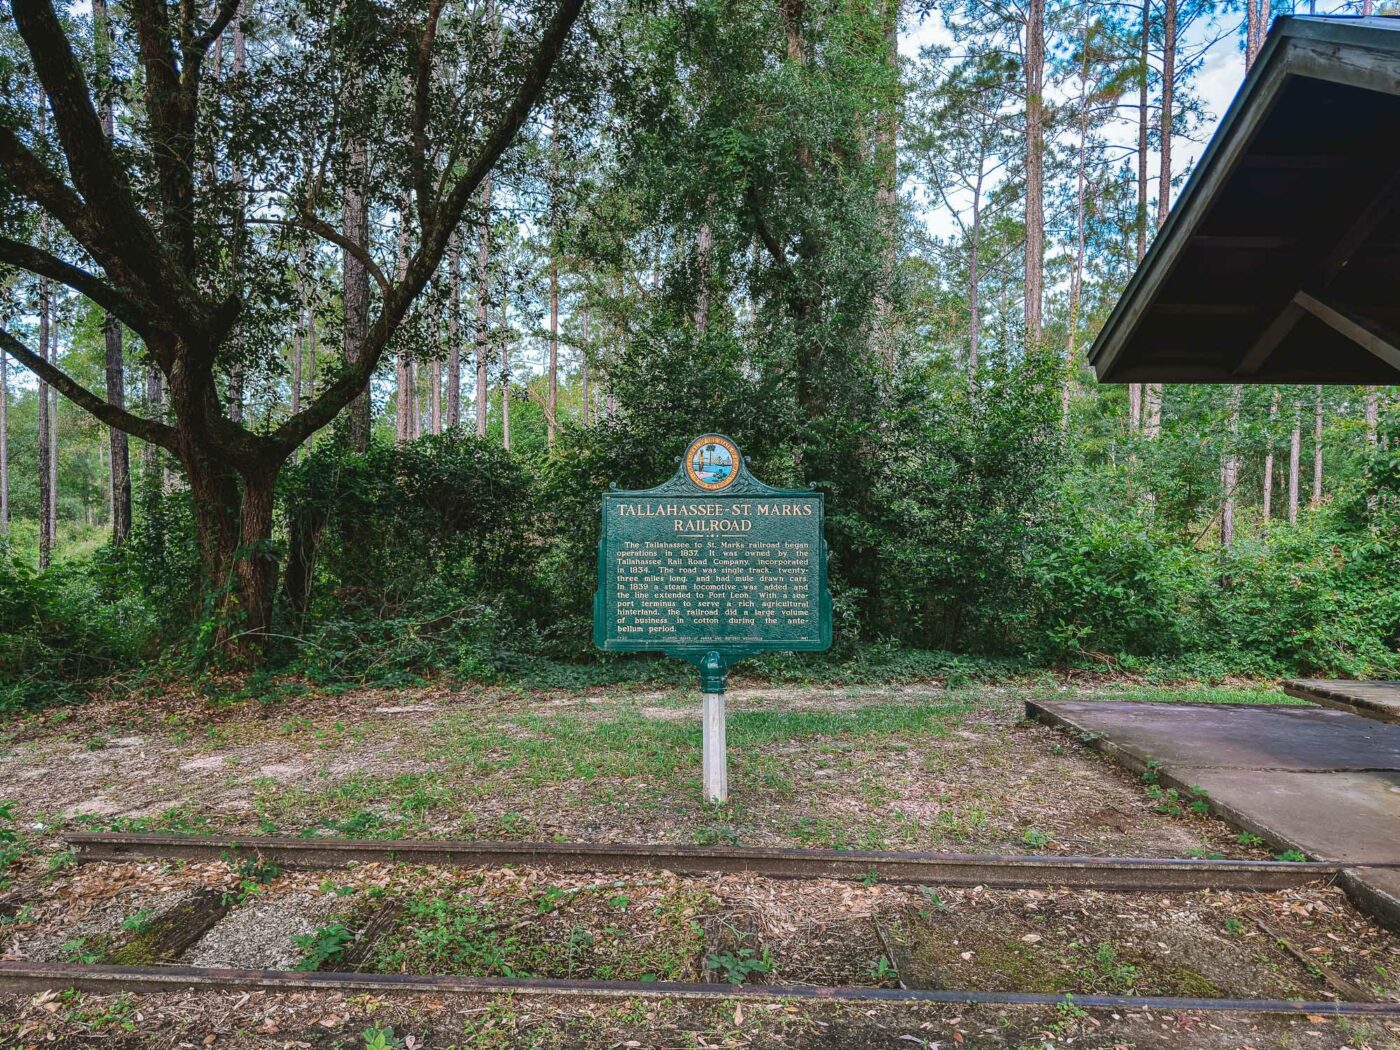 USA Florida Tallahassee St. Marks Historic Railroad State Trail 9795